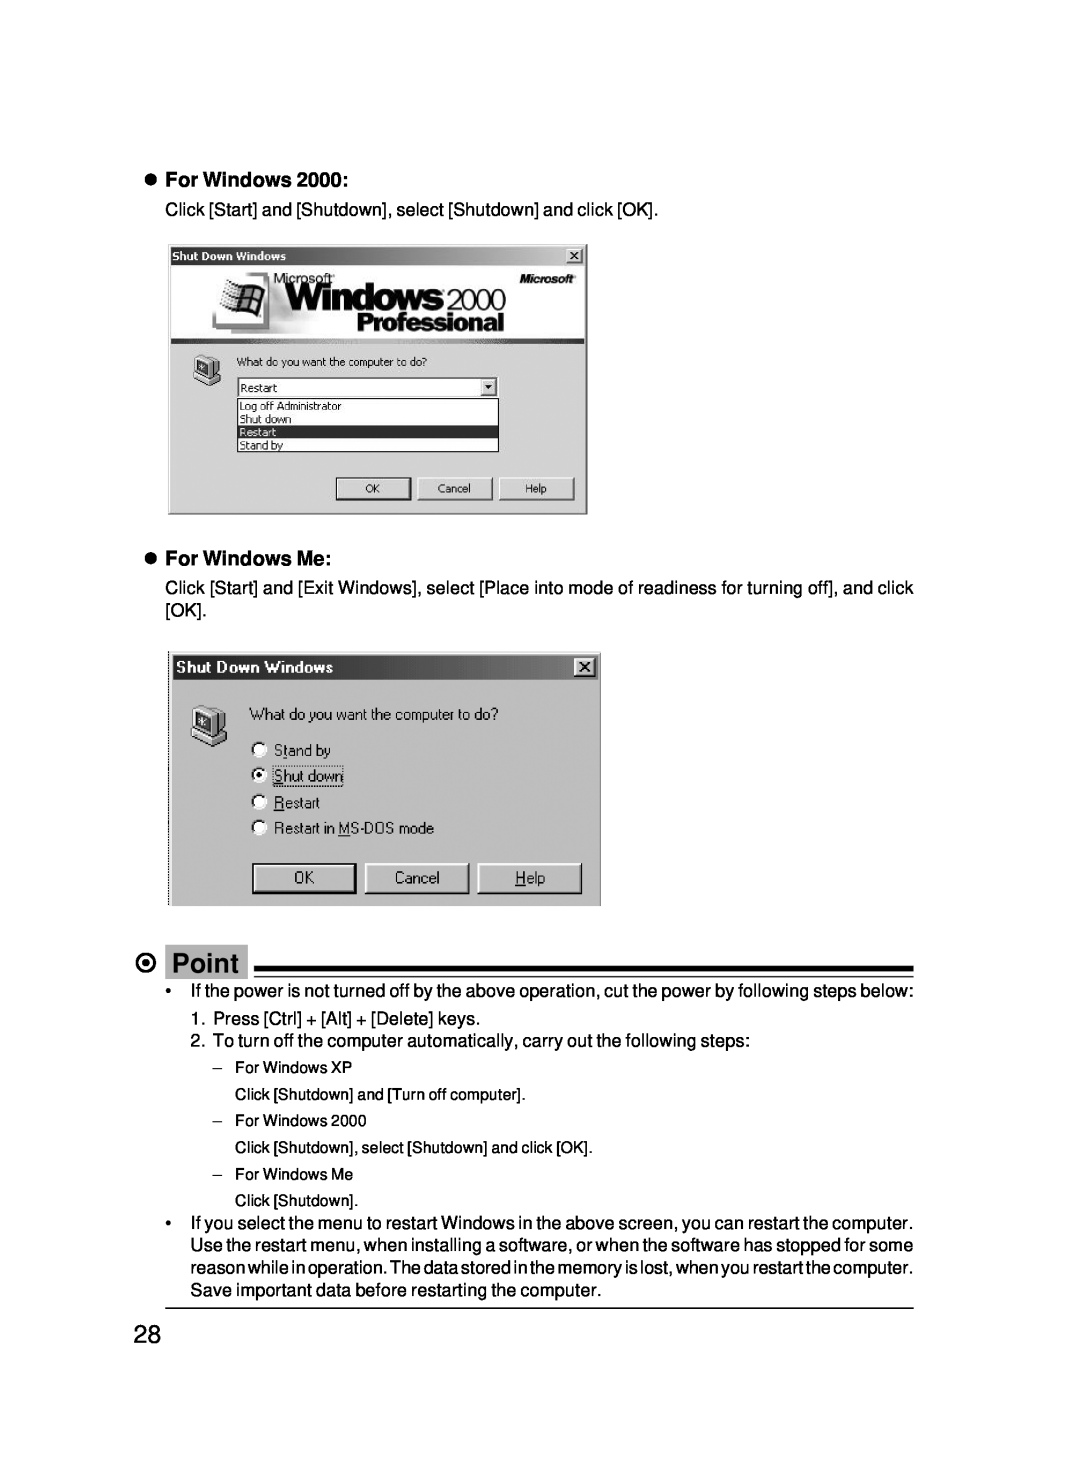 Fujitsu 5000 user manual Point, For Windows Me 